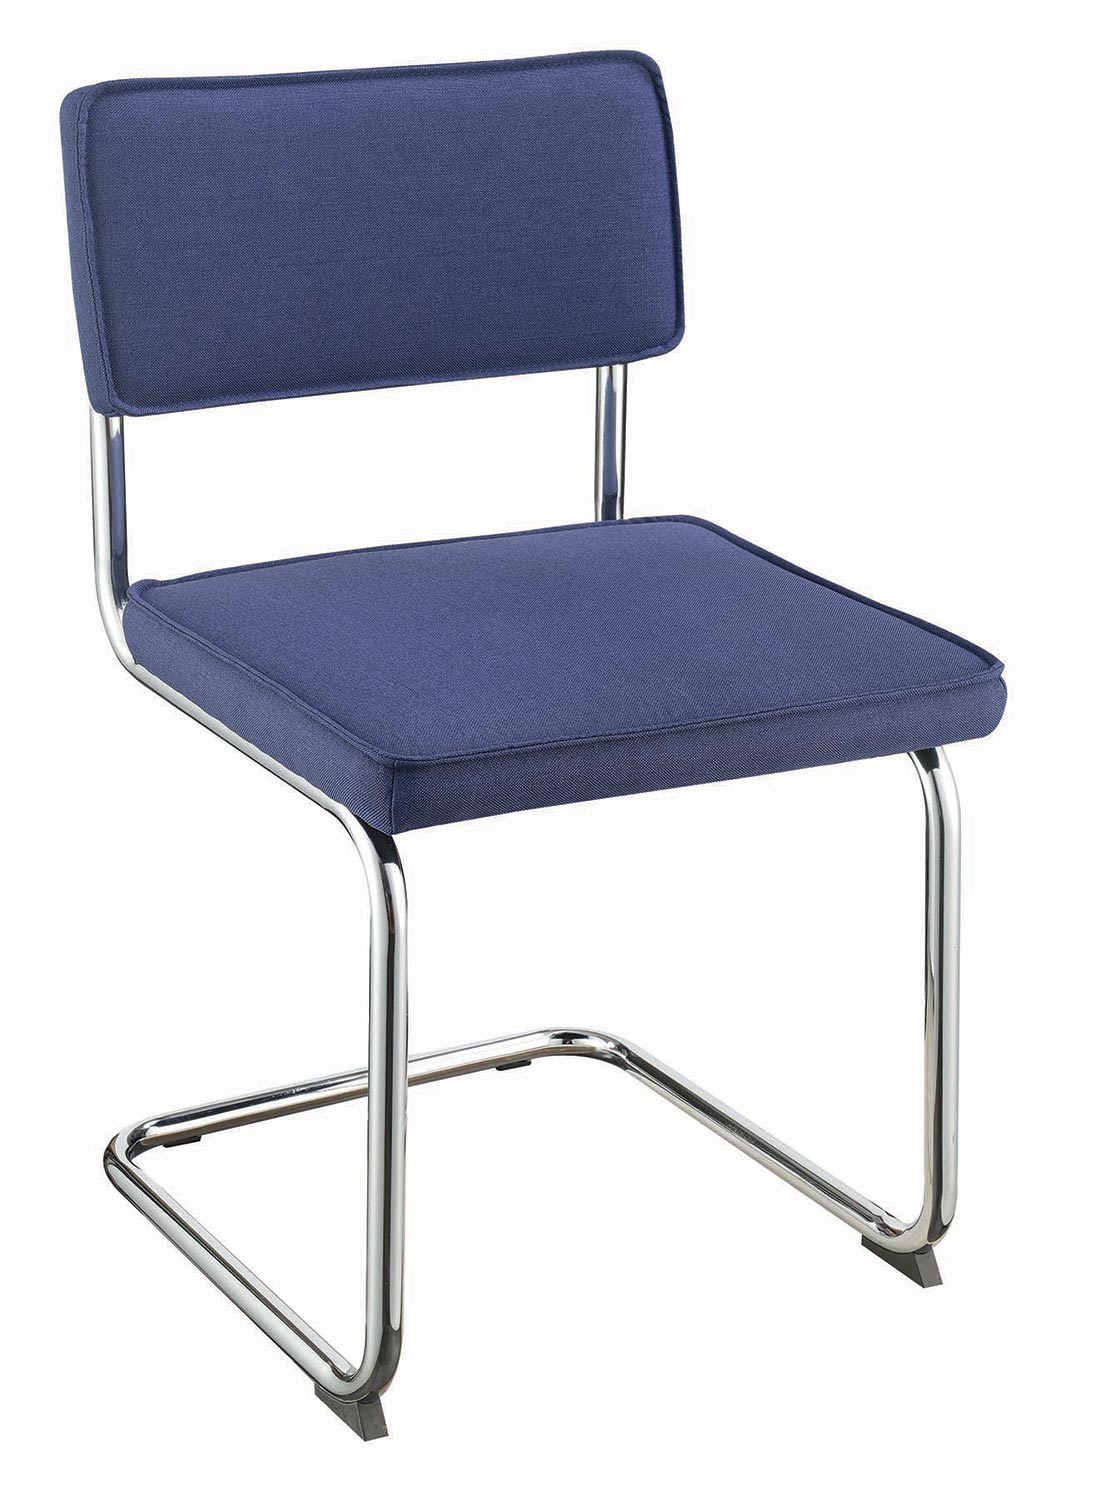 Coaster Walsh Dining Side Chair - Dark Blue Fabric